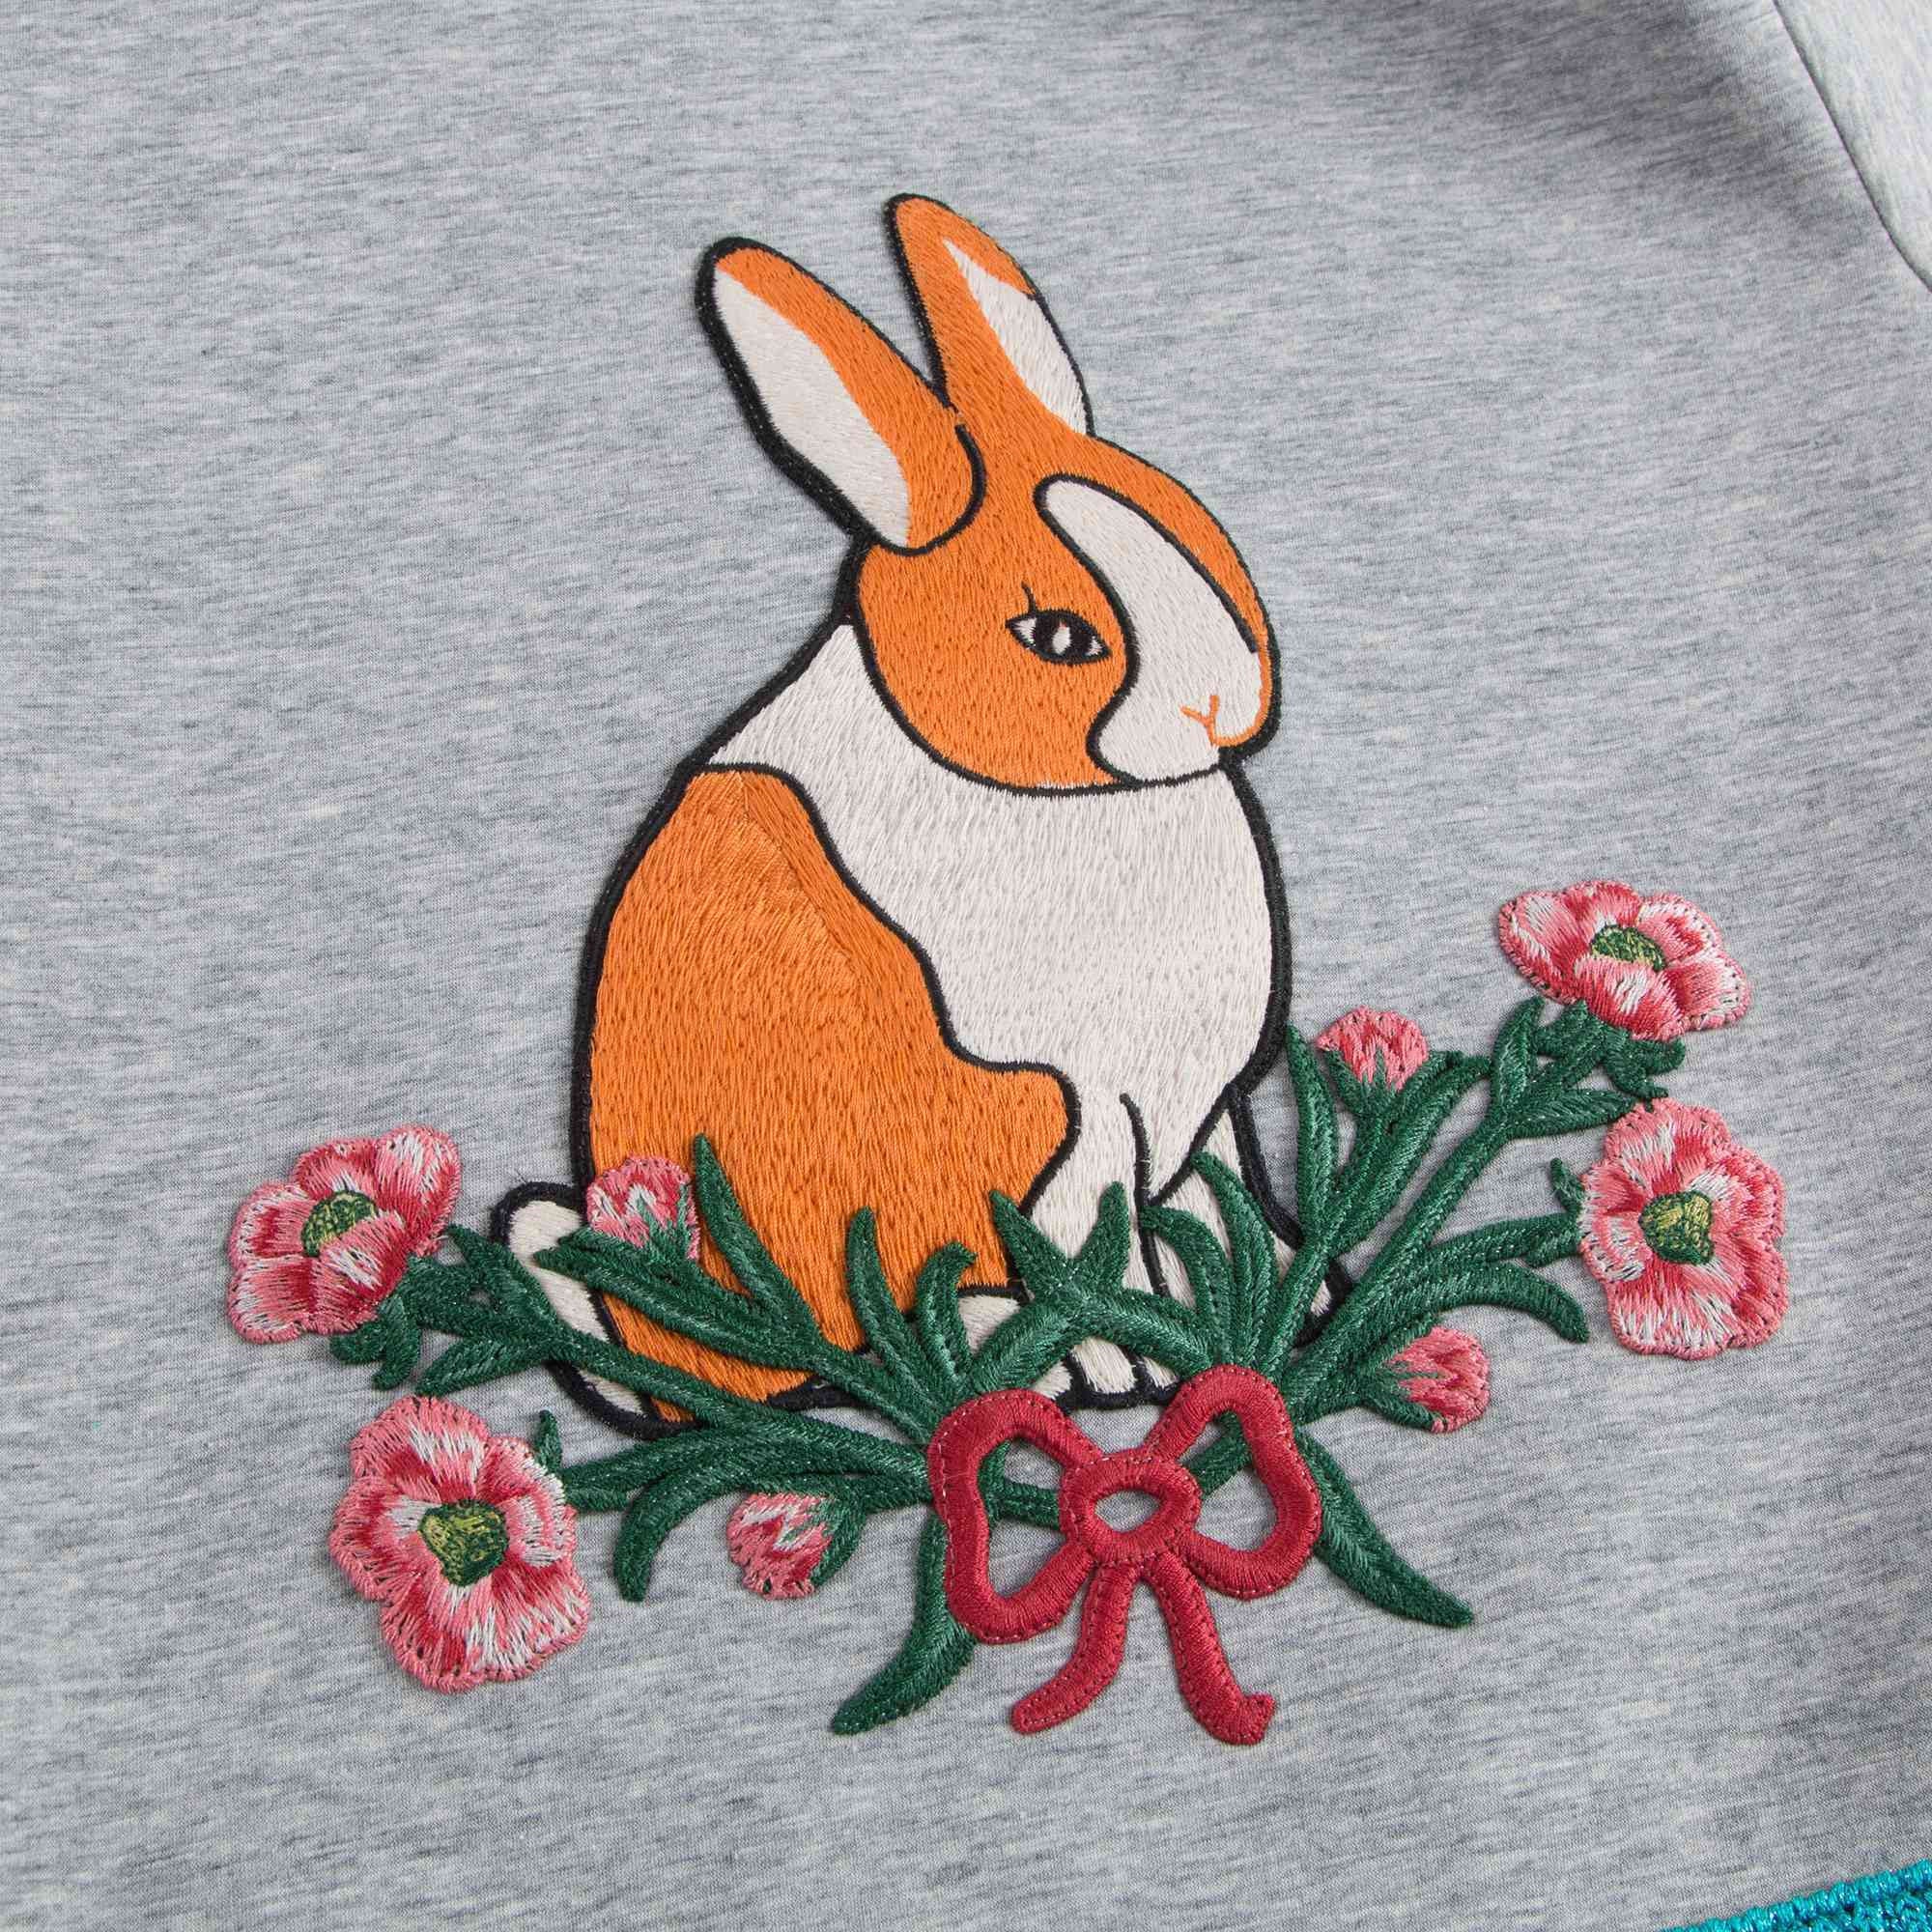 Baby Grey Rabbit Printed Sweatshirt